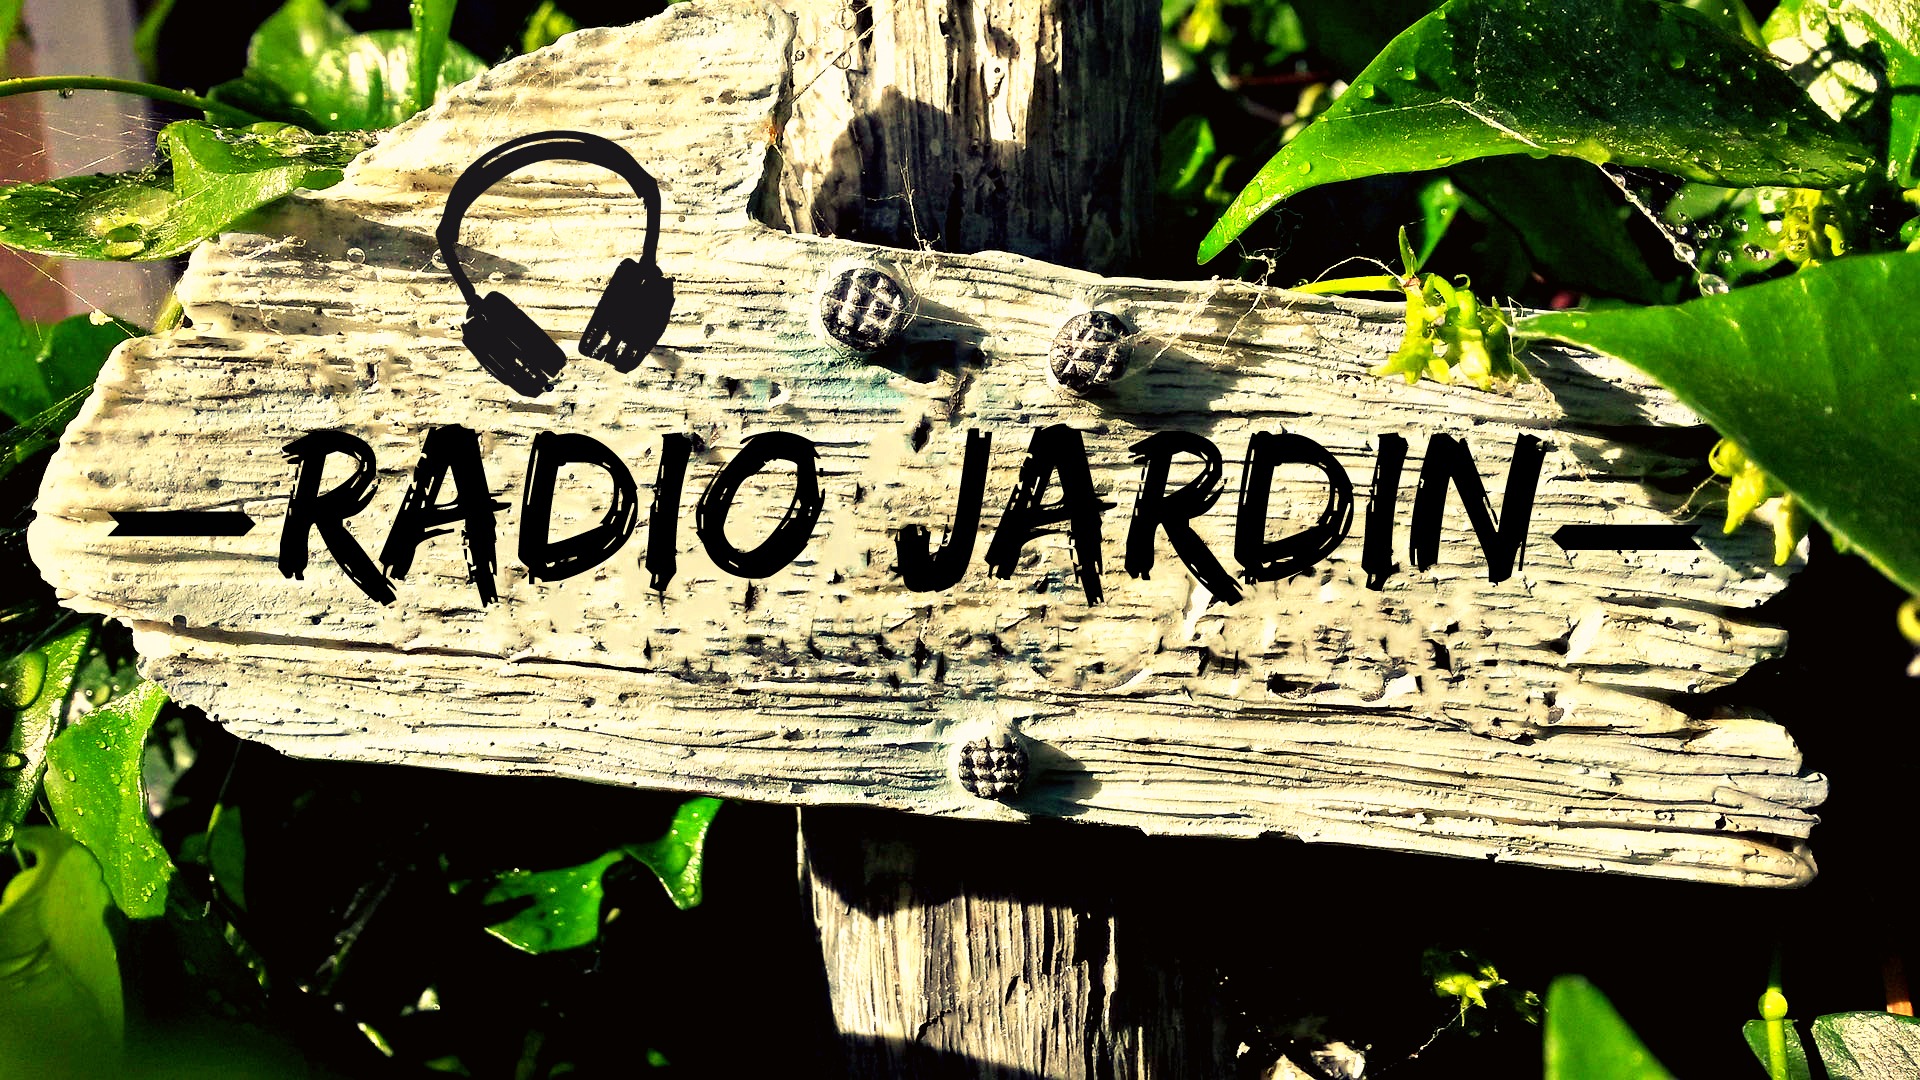 Radio Jardin du 30.05.2017